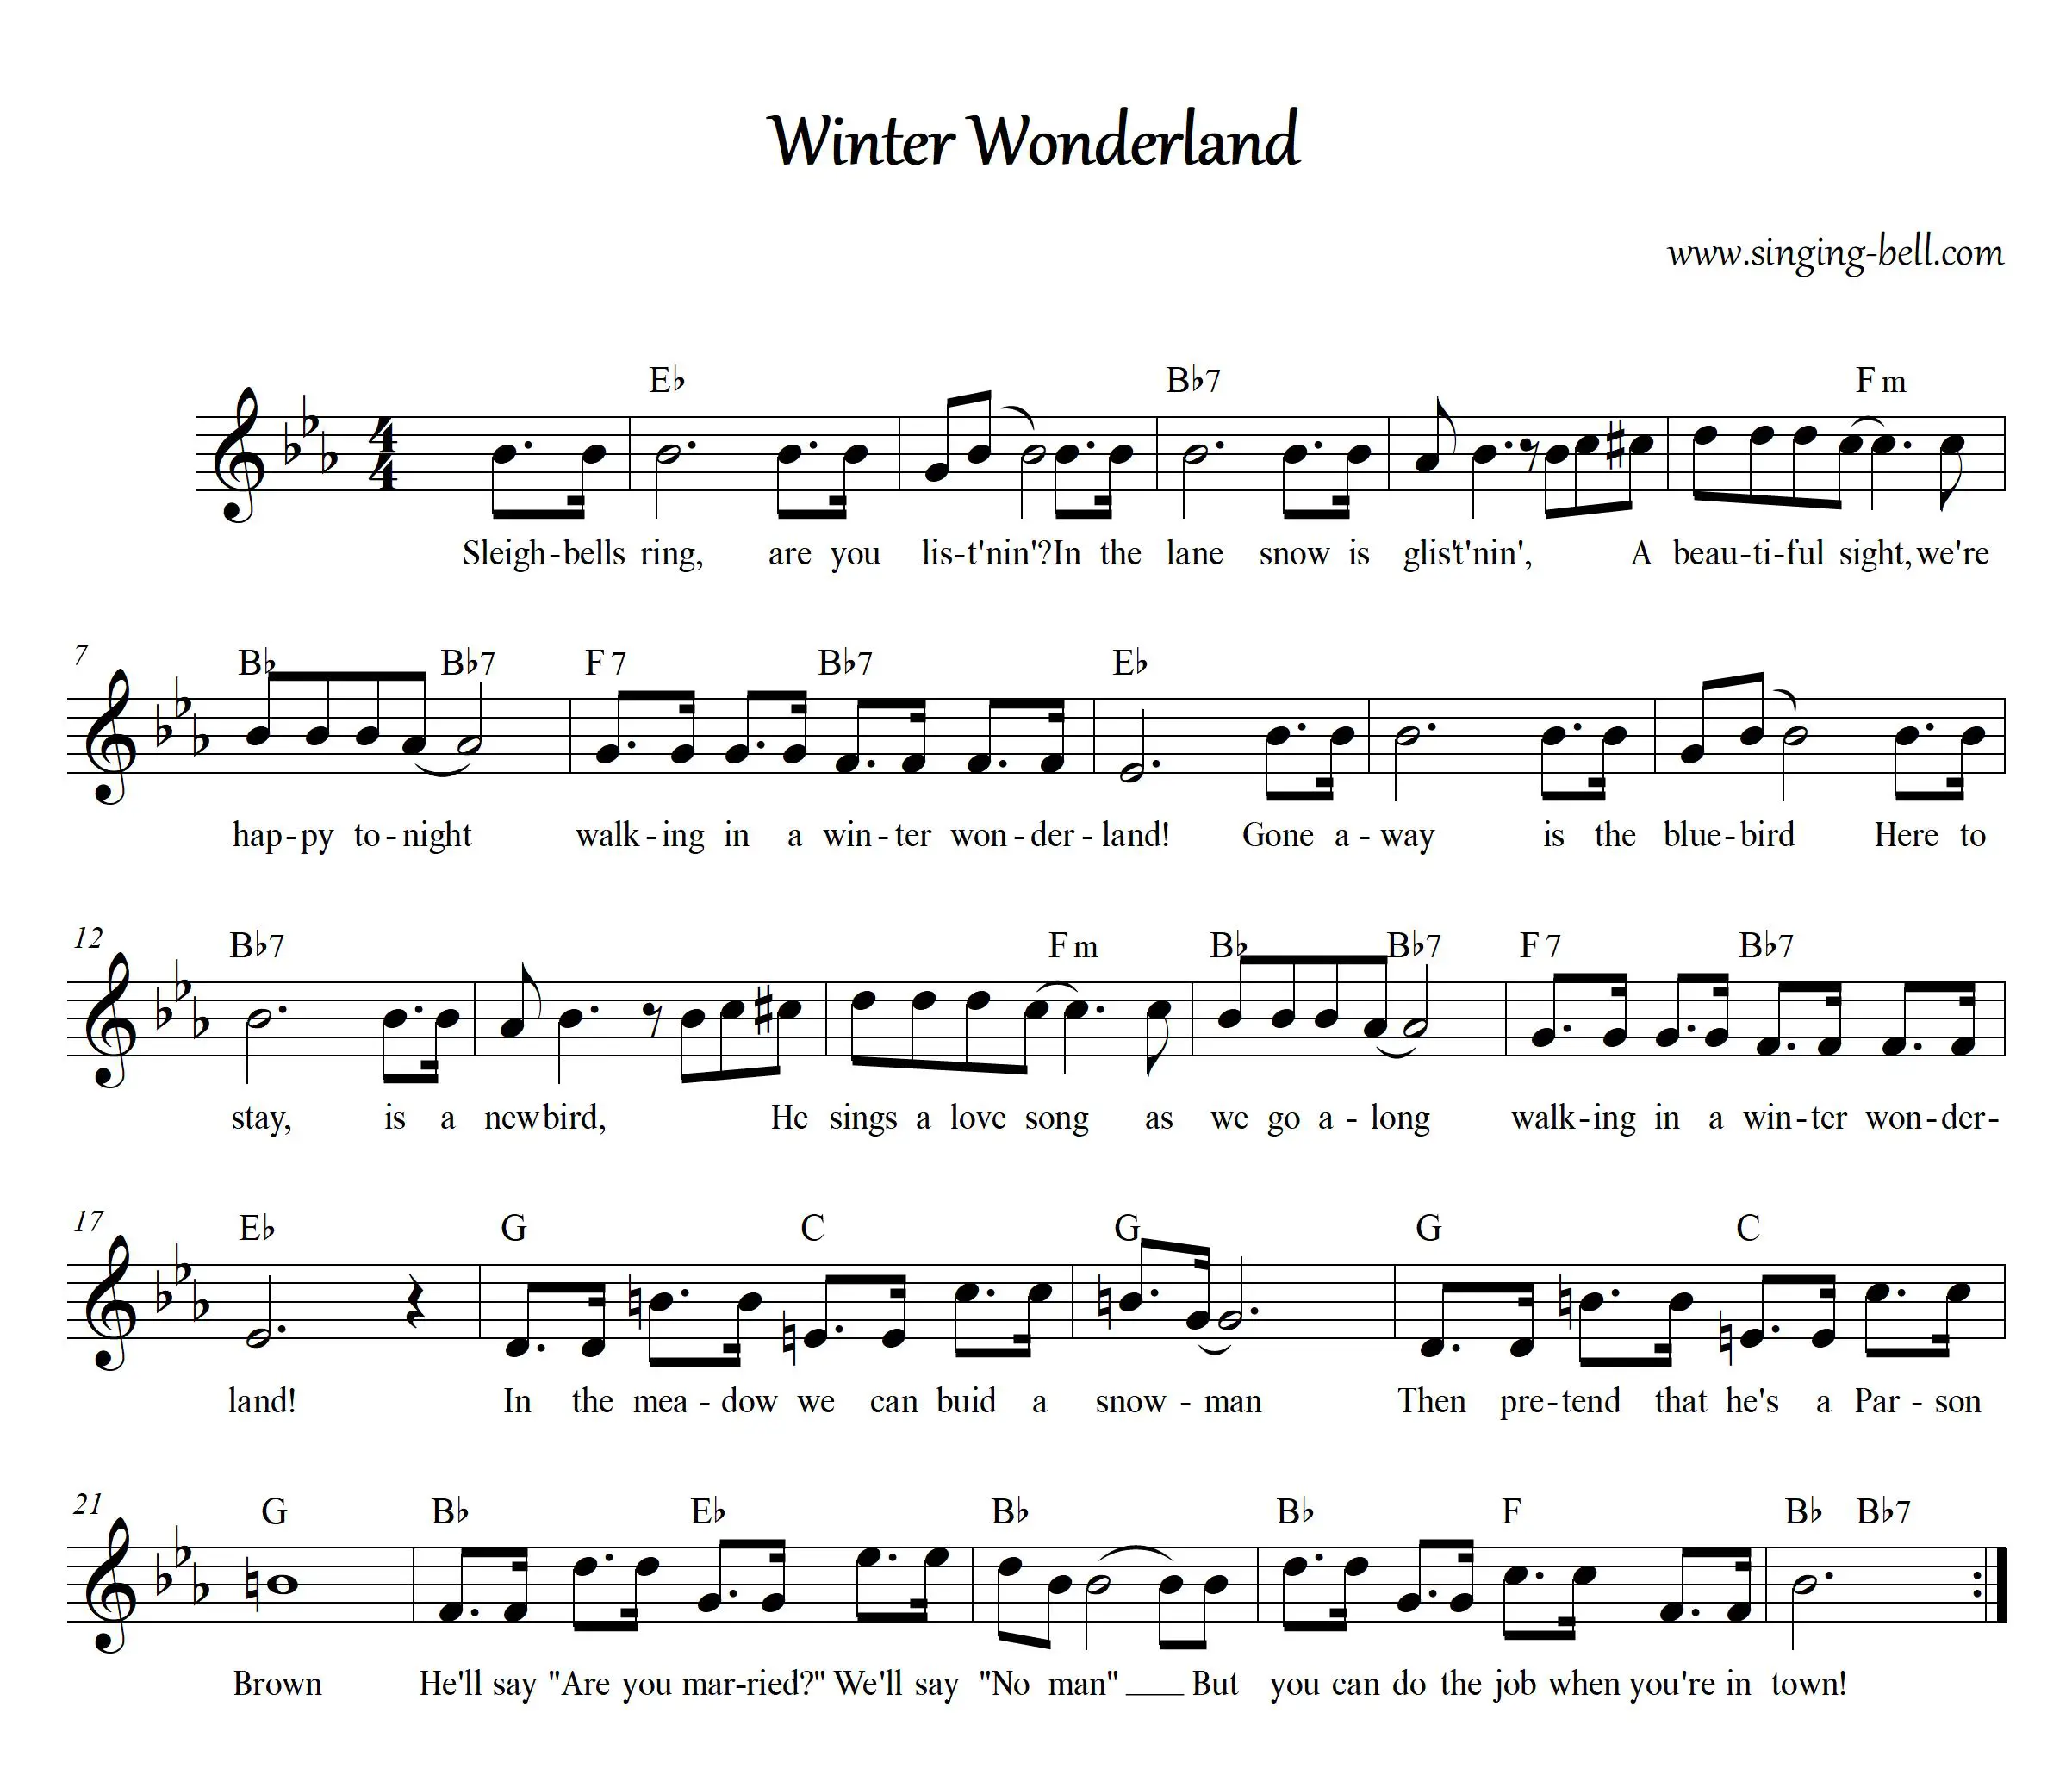 Winter Wonderland Sheet Music in Eb